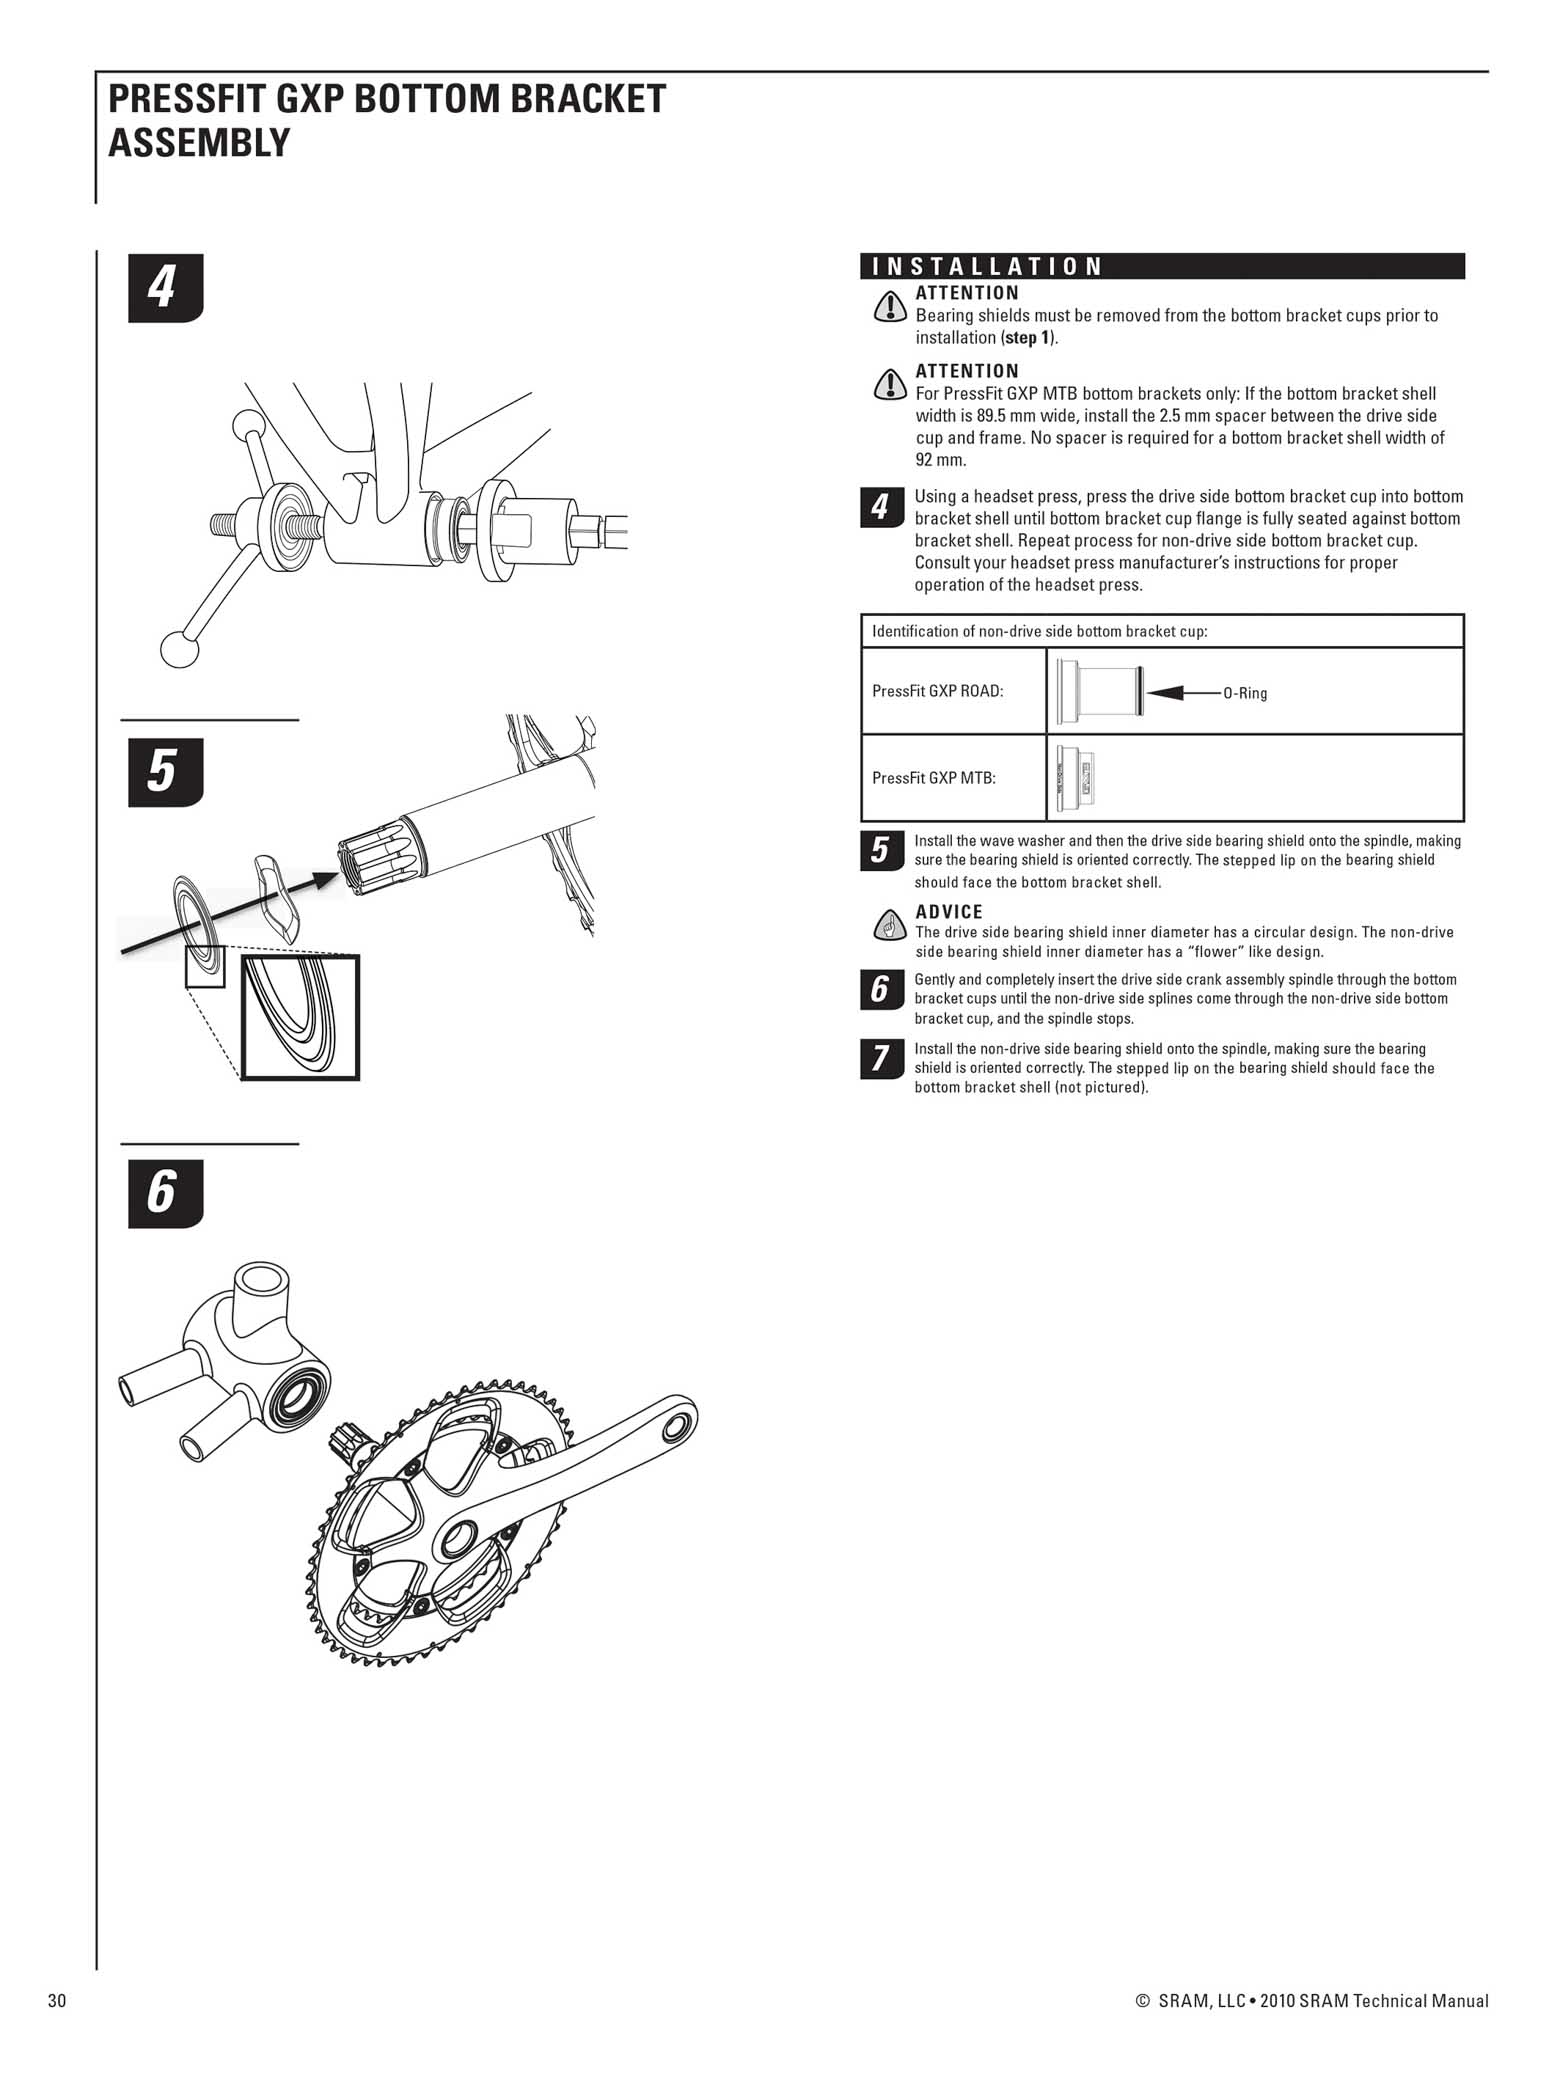 SRAM Technical Manual 2010 page 030 main image